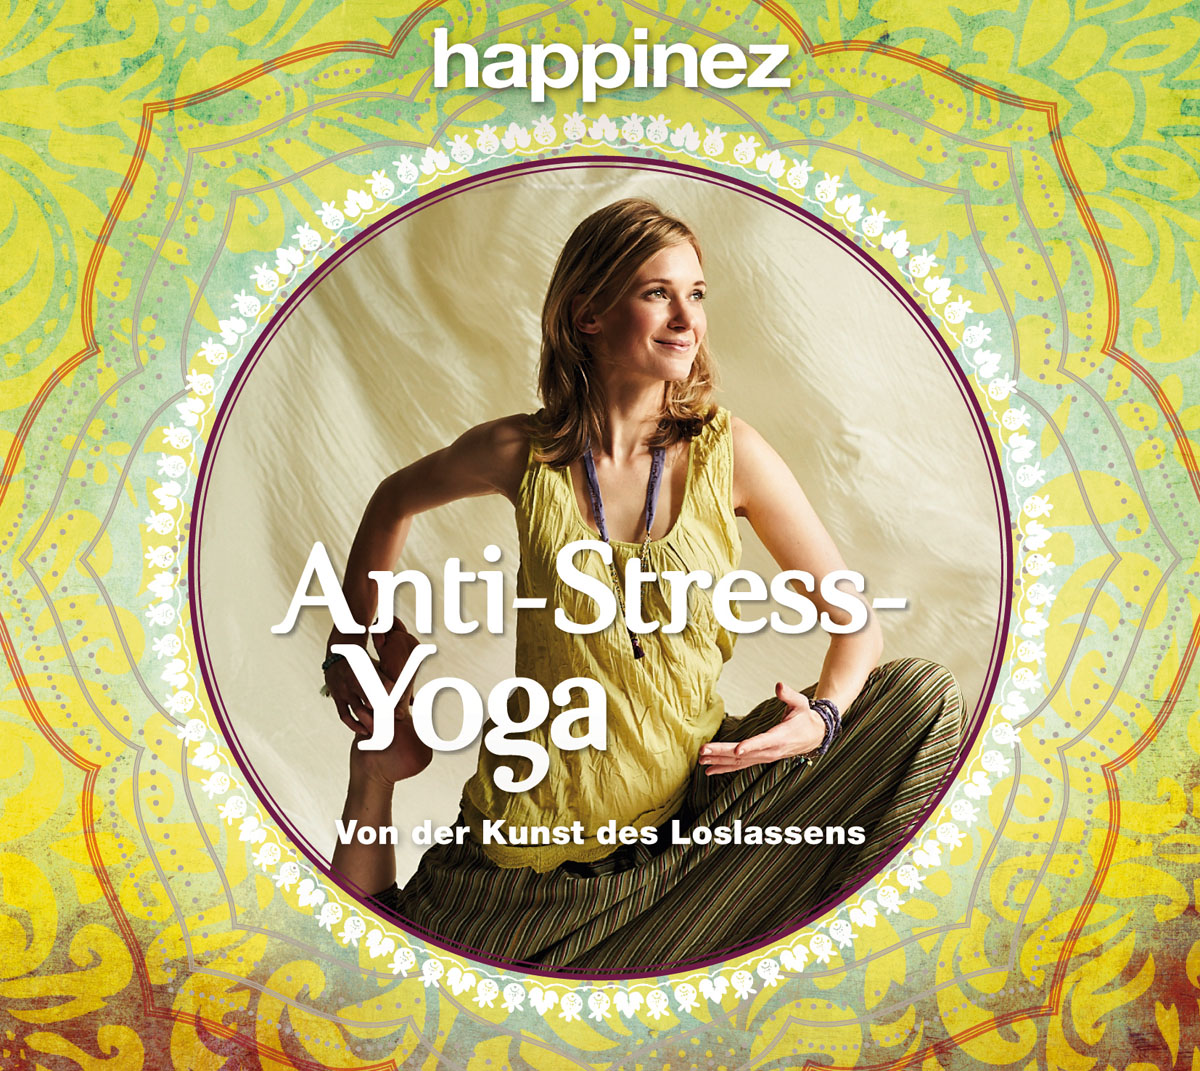 Happinez CD Anti-Stress-Yoga